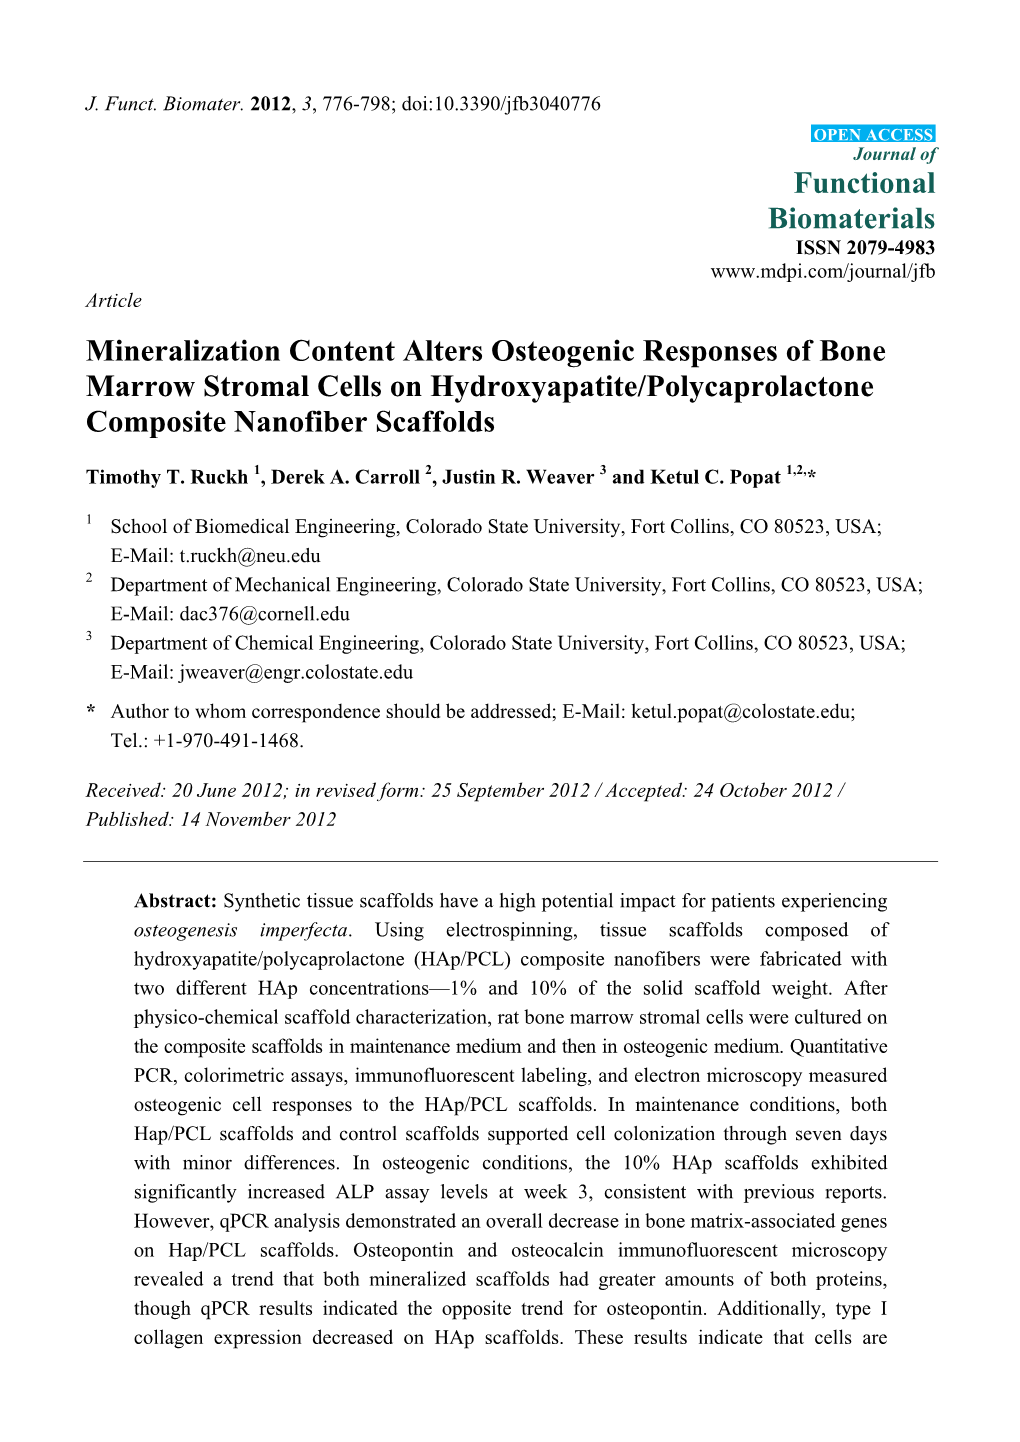 Mineralization Content Alters Osteogenic Responses of Bone Marrow Stromal Cells on Hydroxyapatite/Polycaprolactone Composite Nanofiber Scaffolds